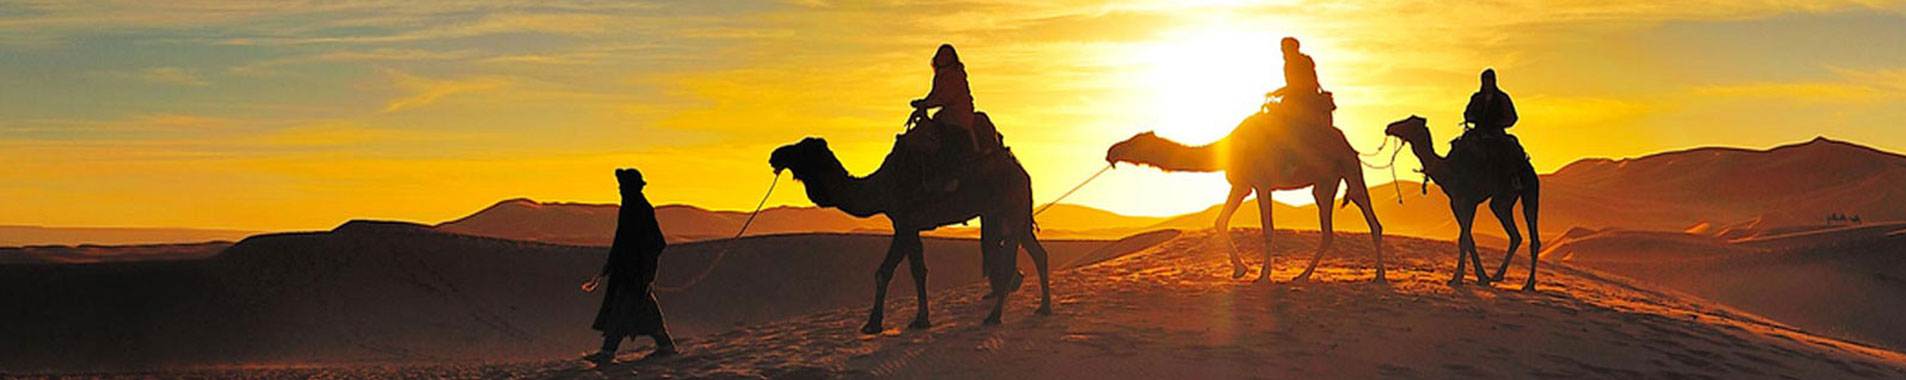 tourist riding camel during desert trekking